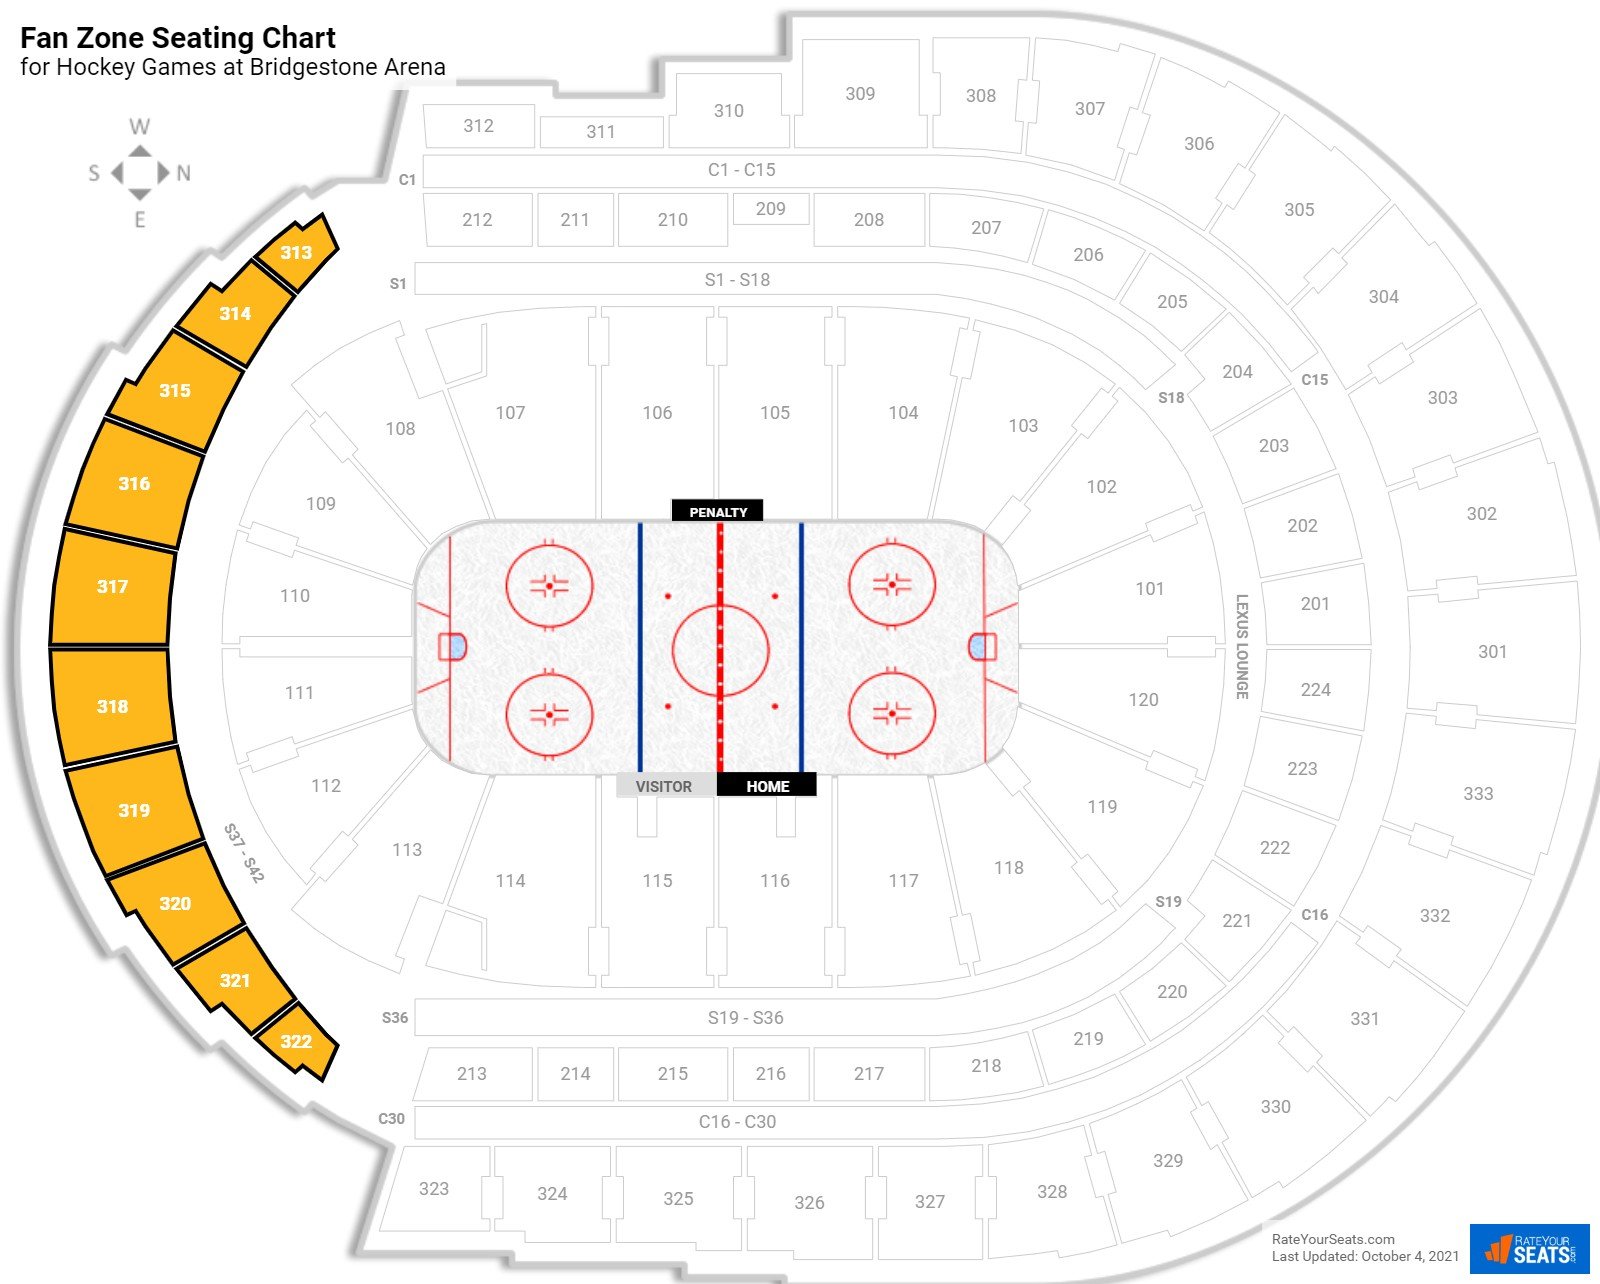 Hockey Fan Zone Seating Chart at Bridgestone Arena